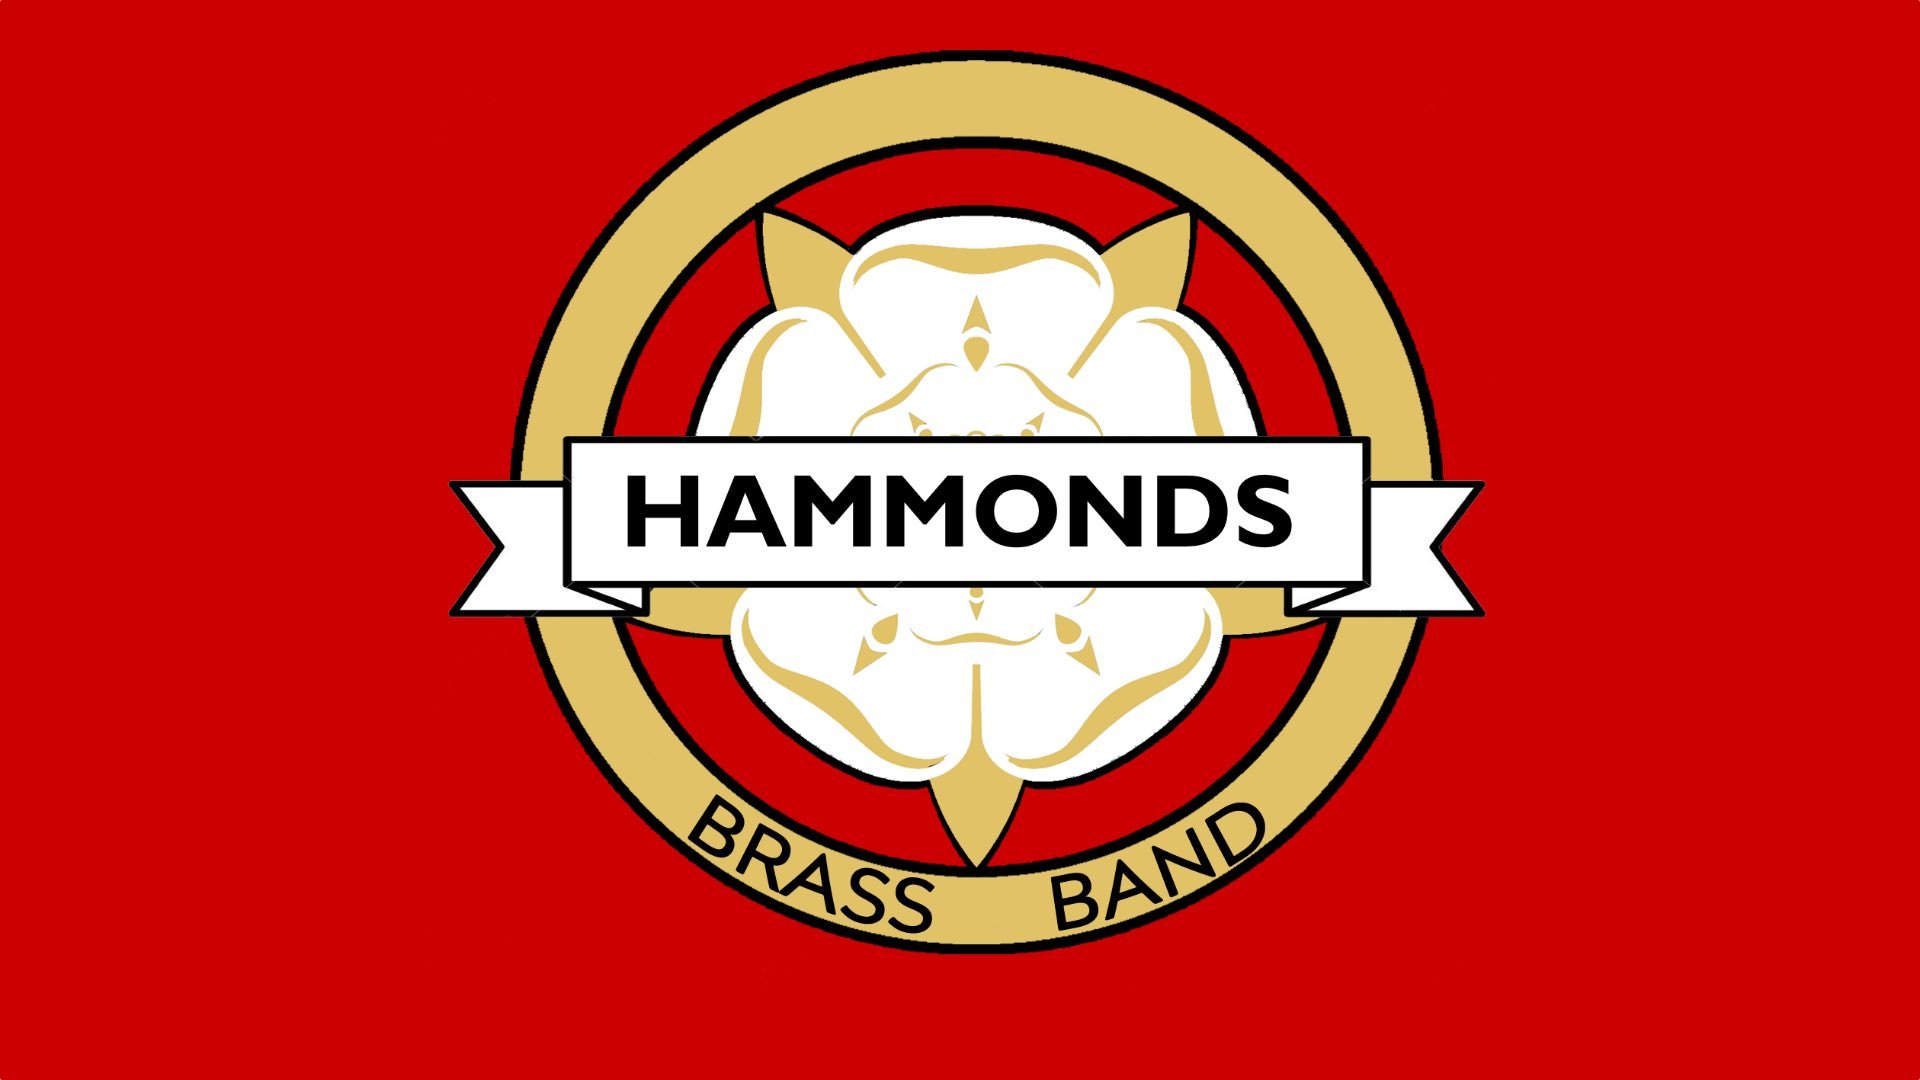  Hammonds Band